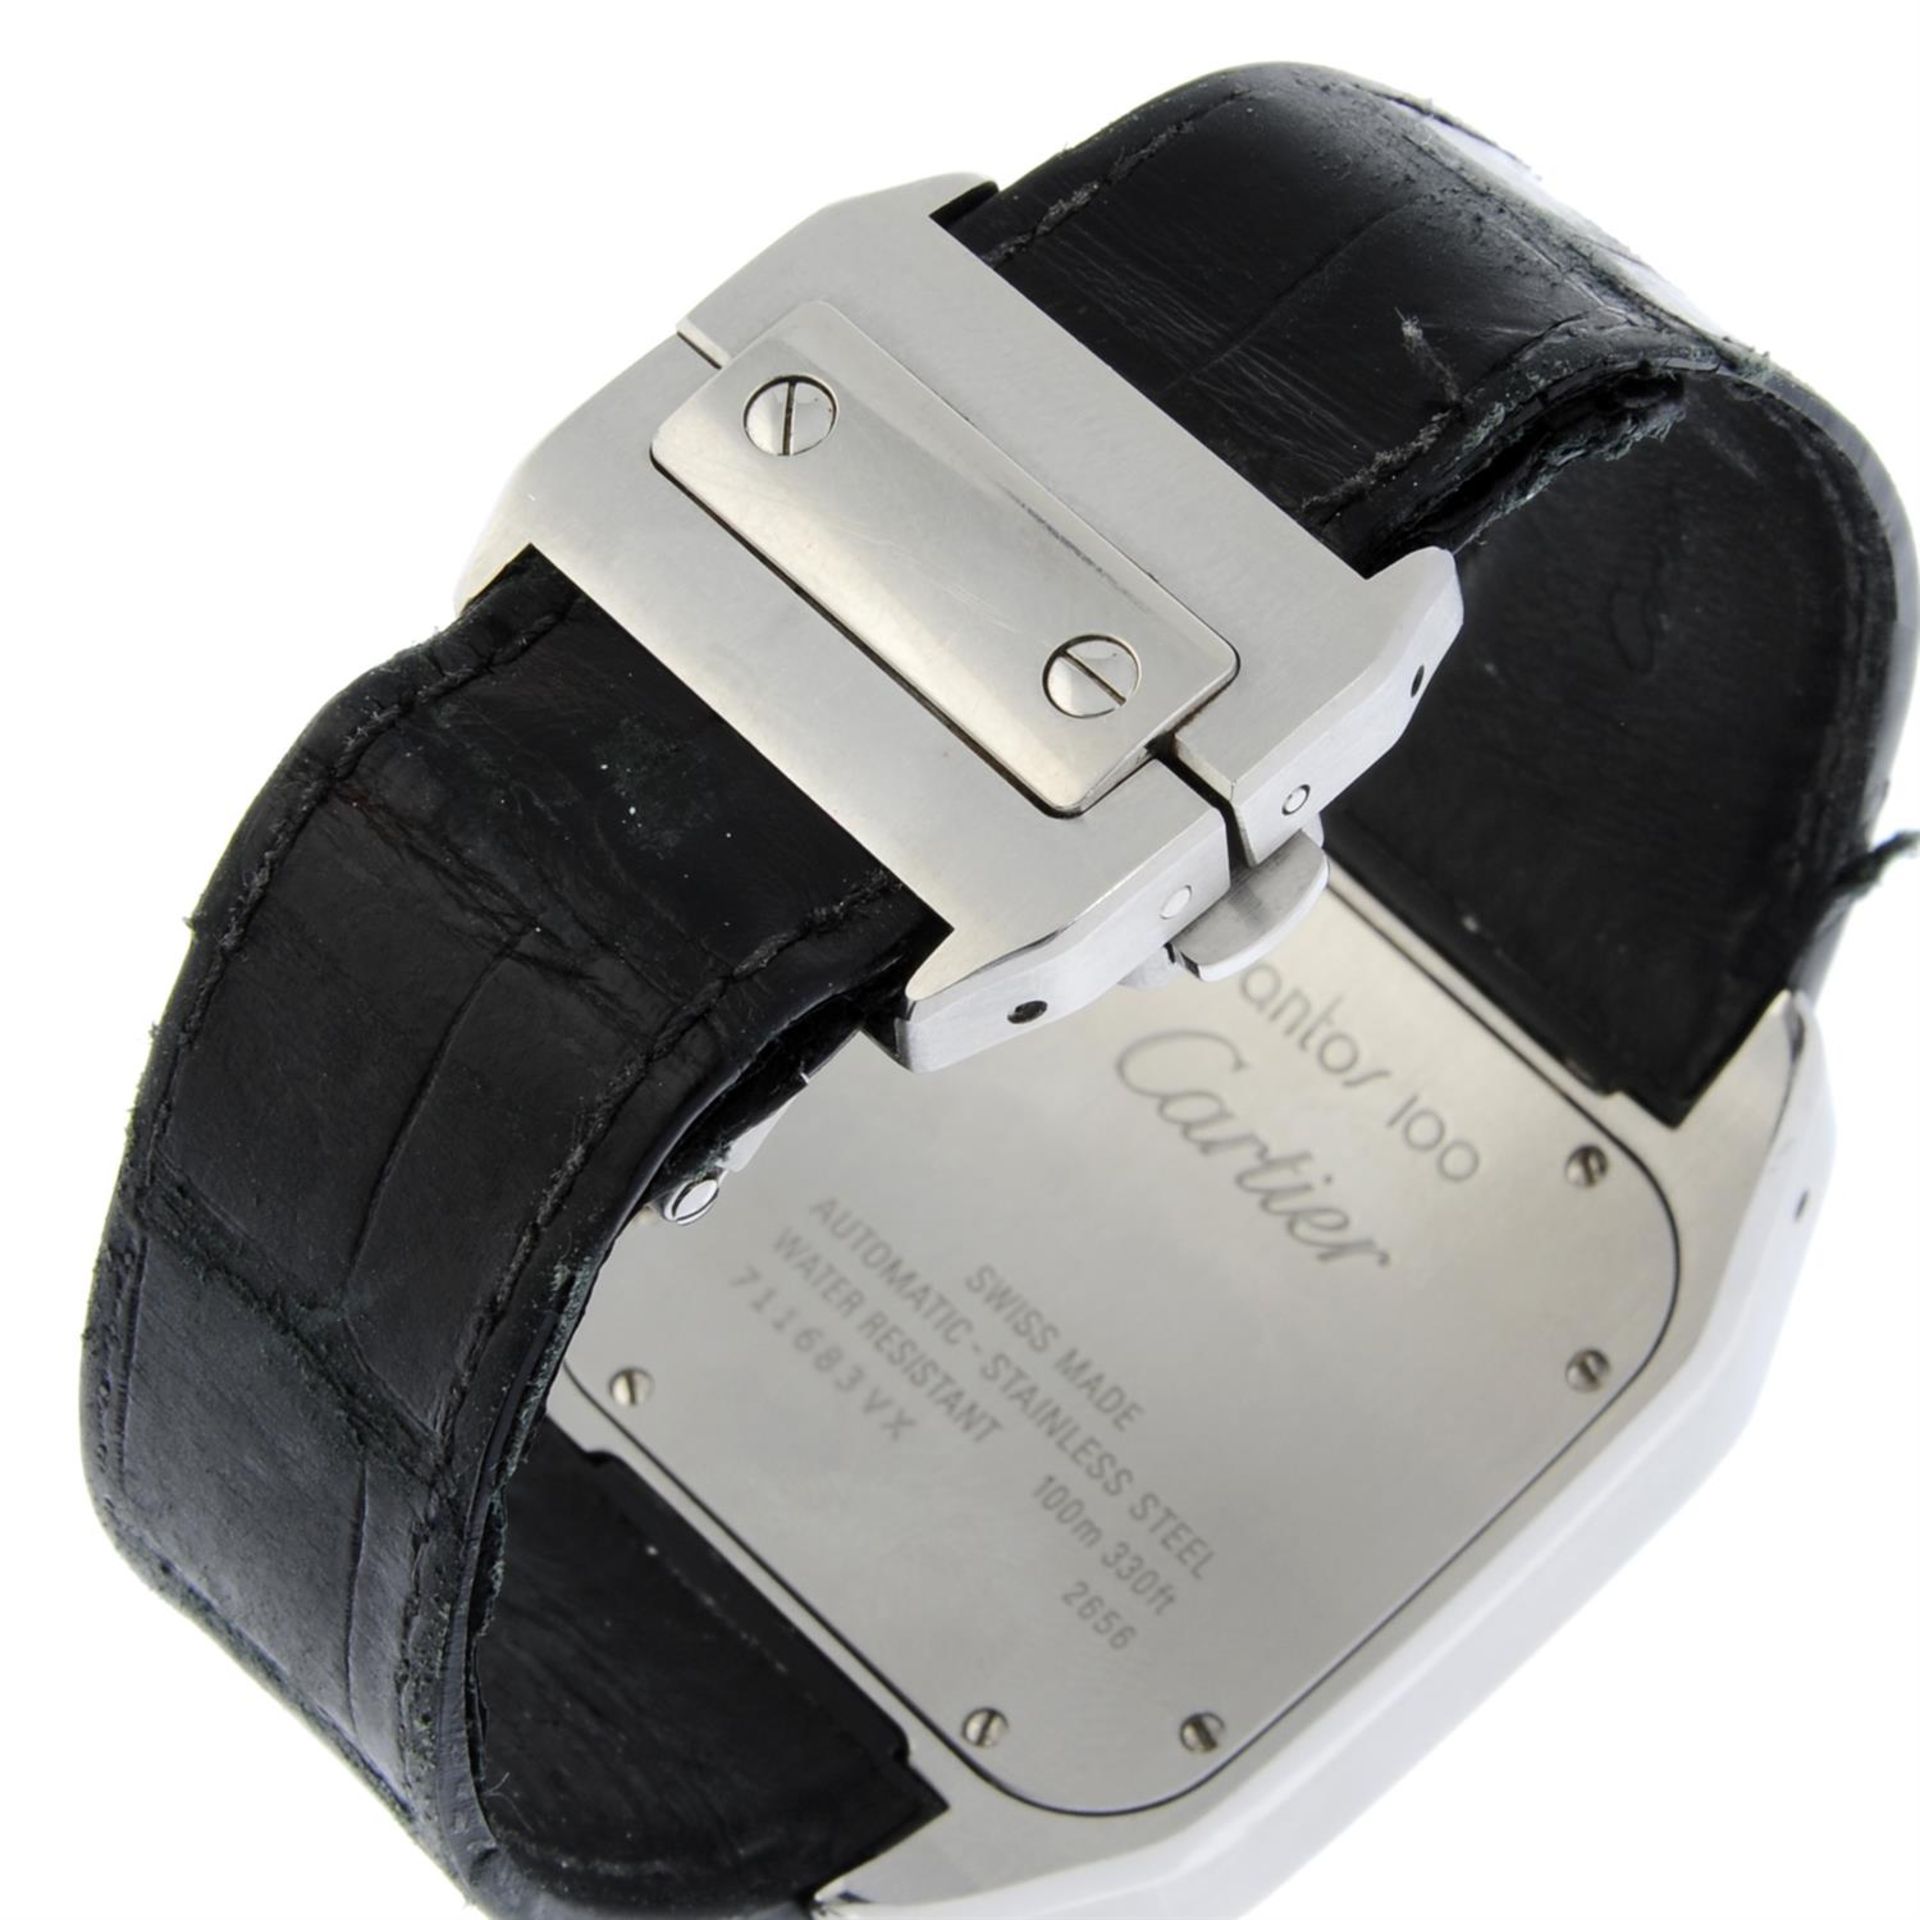 CARTIER - a stainless steel Santos 100 XL wrist watch, 38mm. - Image 2 of 6